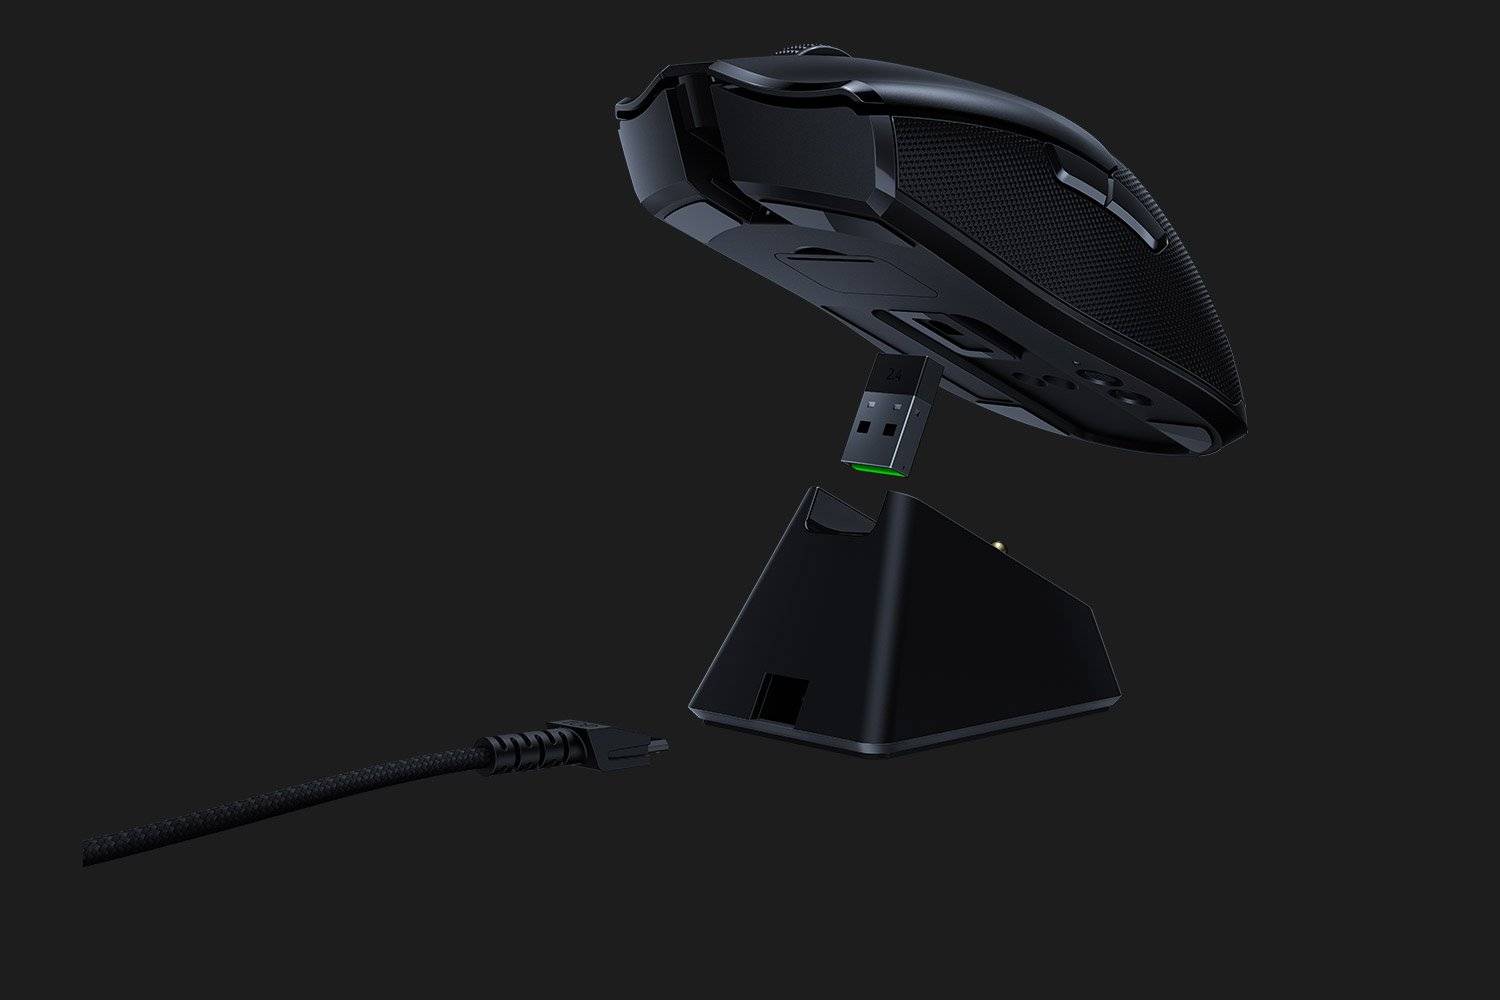 Souris Sans Fil Razer Viper Ultimate & Mouse Dock - PC